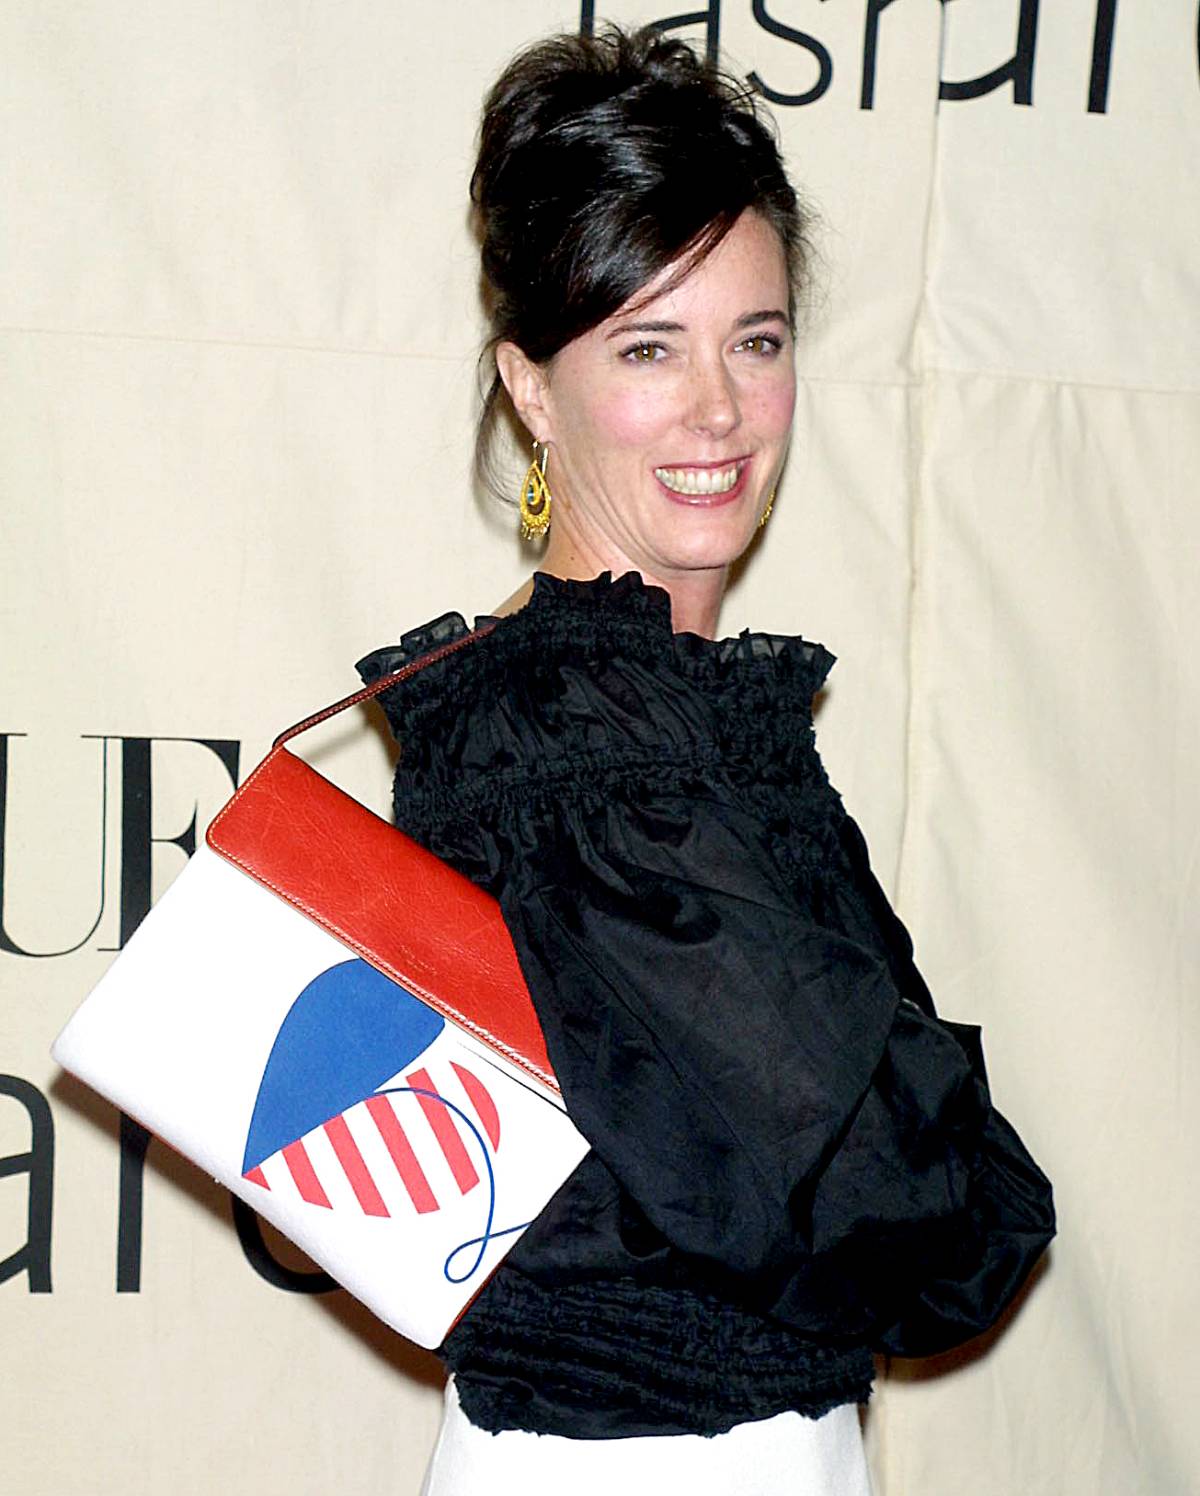 More than a handbag: Fans remember Kate Spade